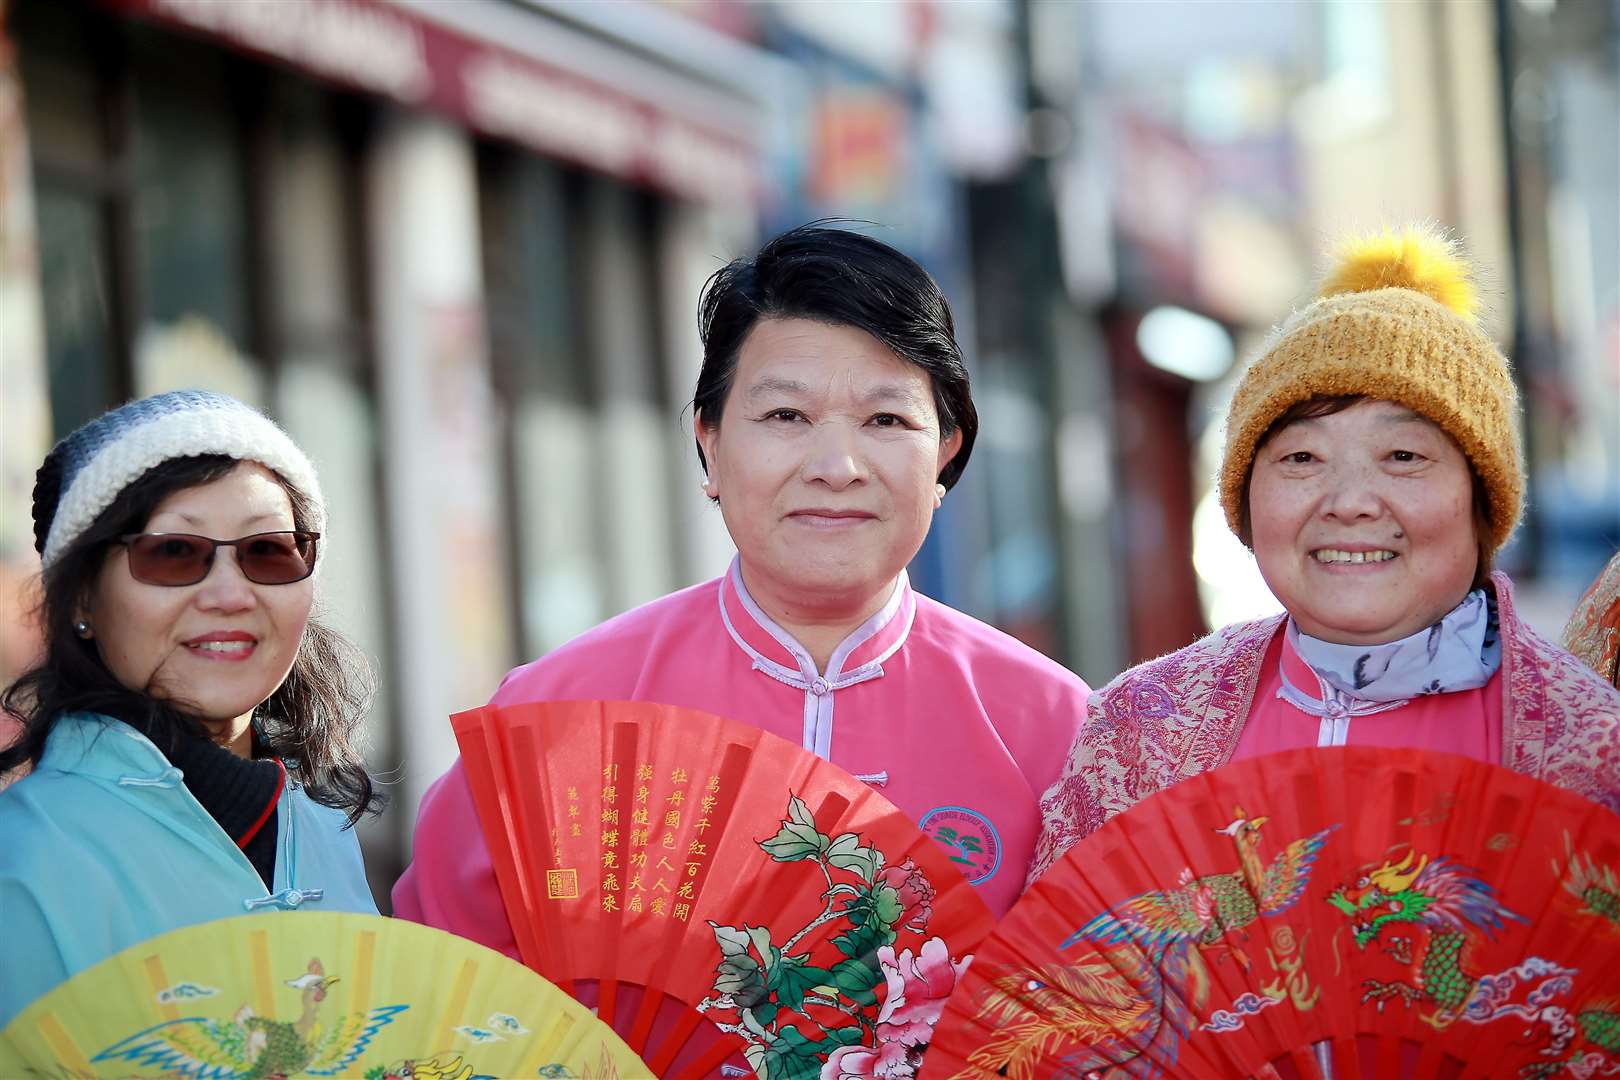 Communities across Kent will be celebrating Chinese New Year